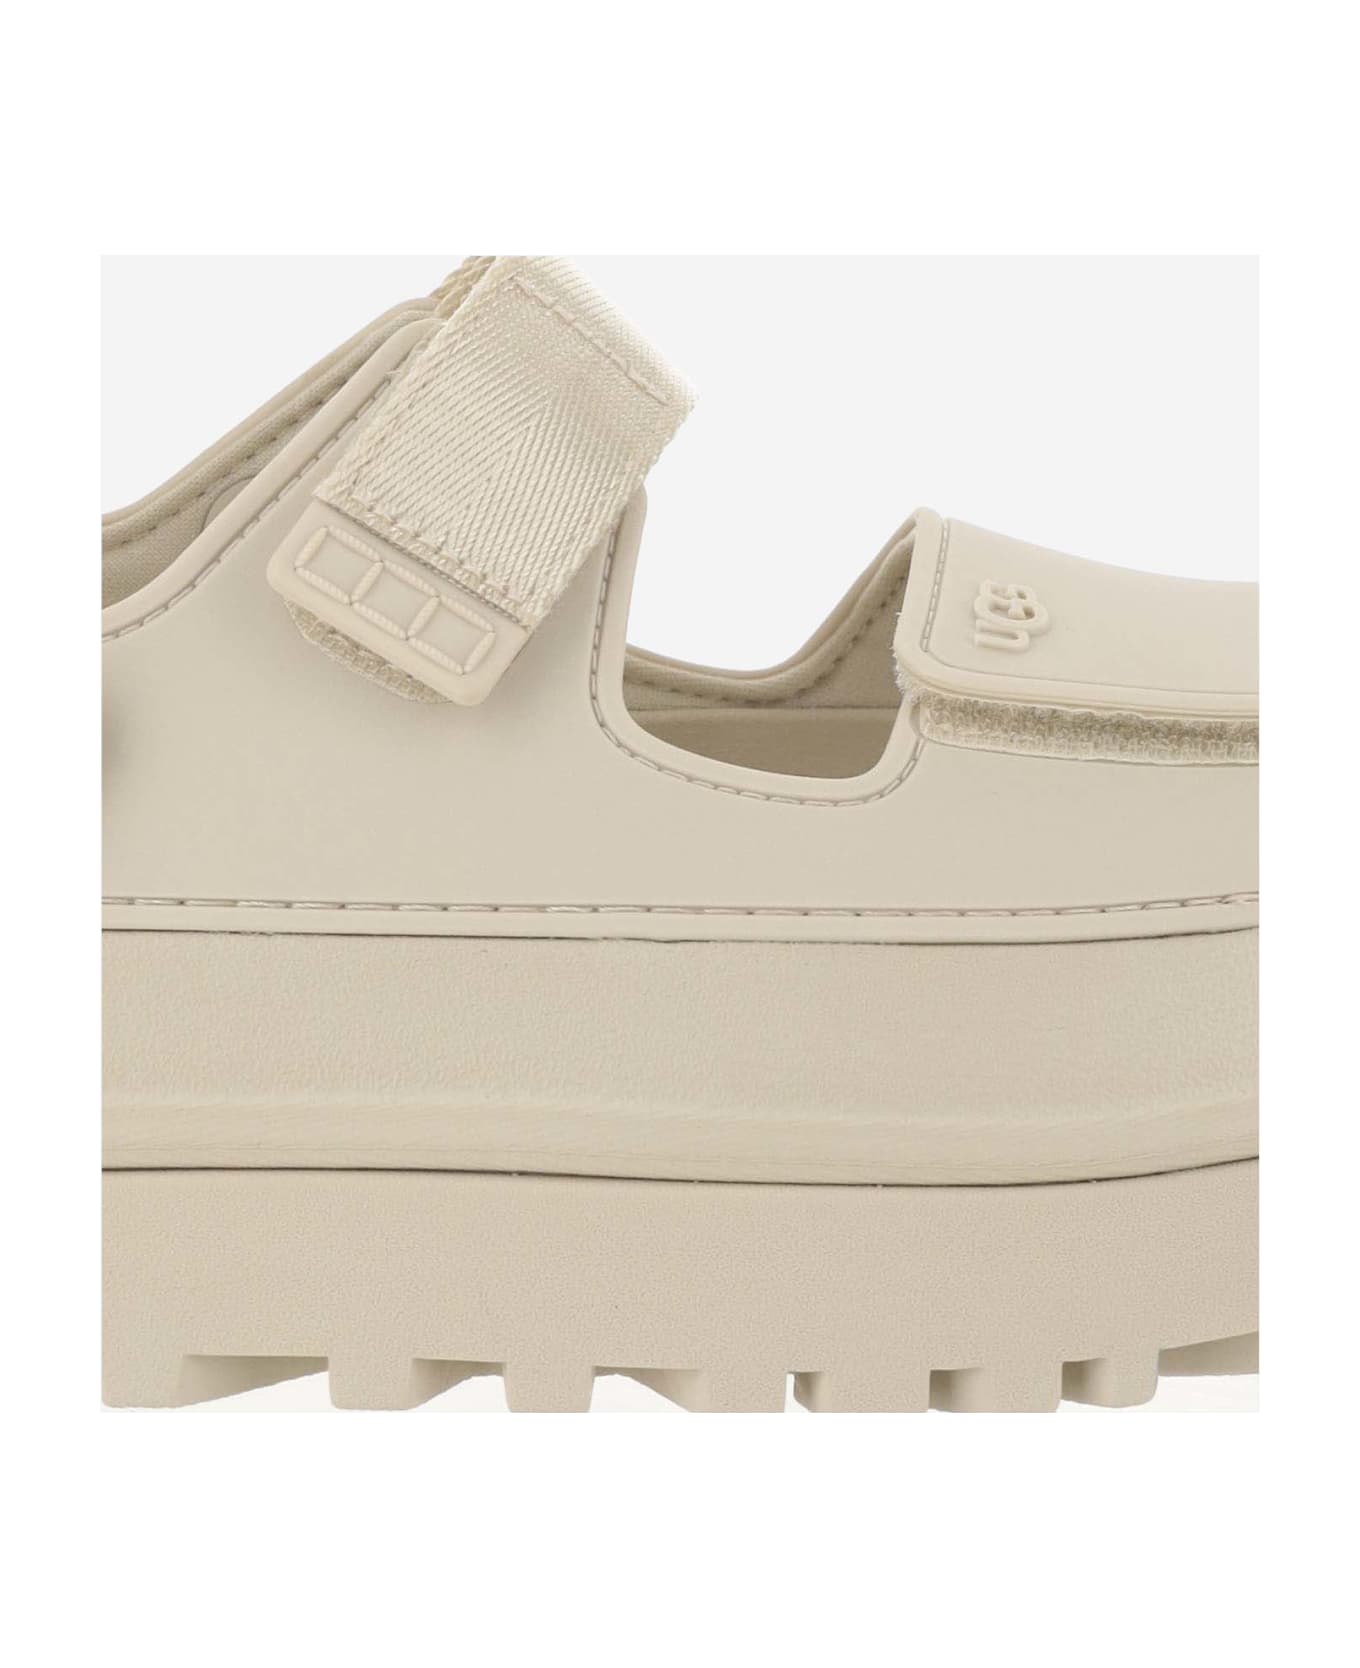 UGG Goldenglow Sandals - WHITE サンダル